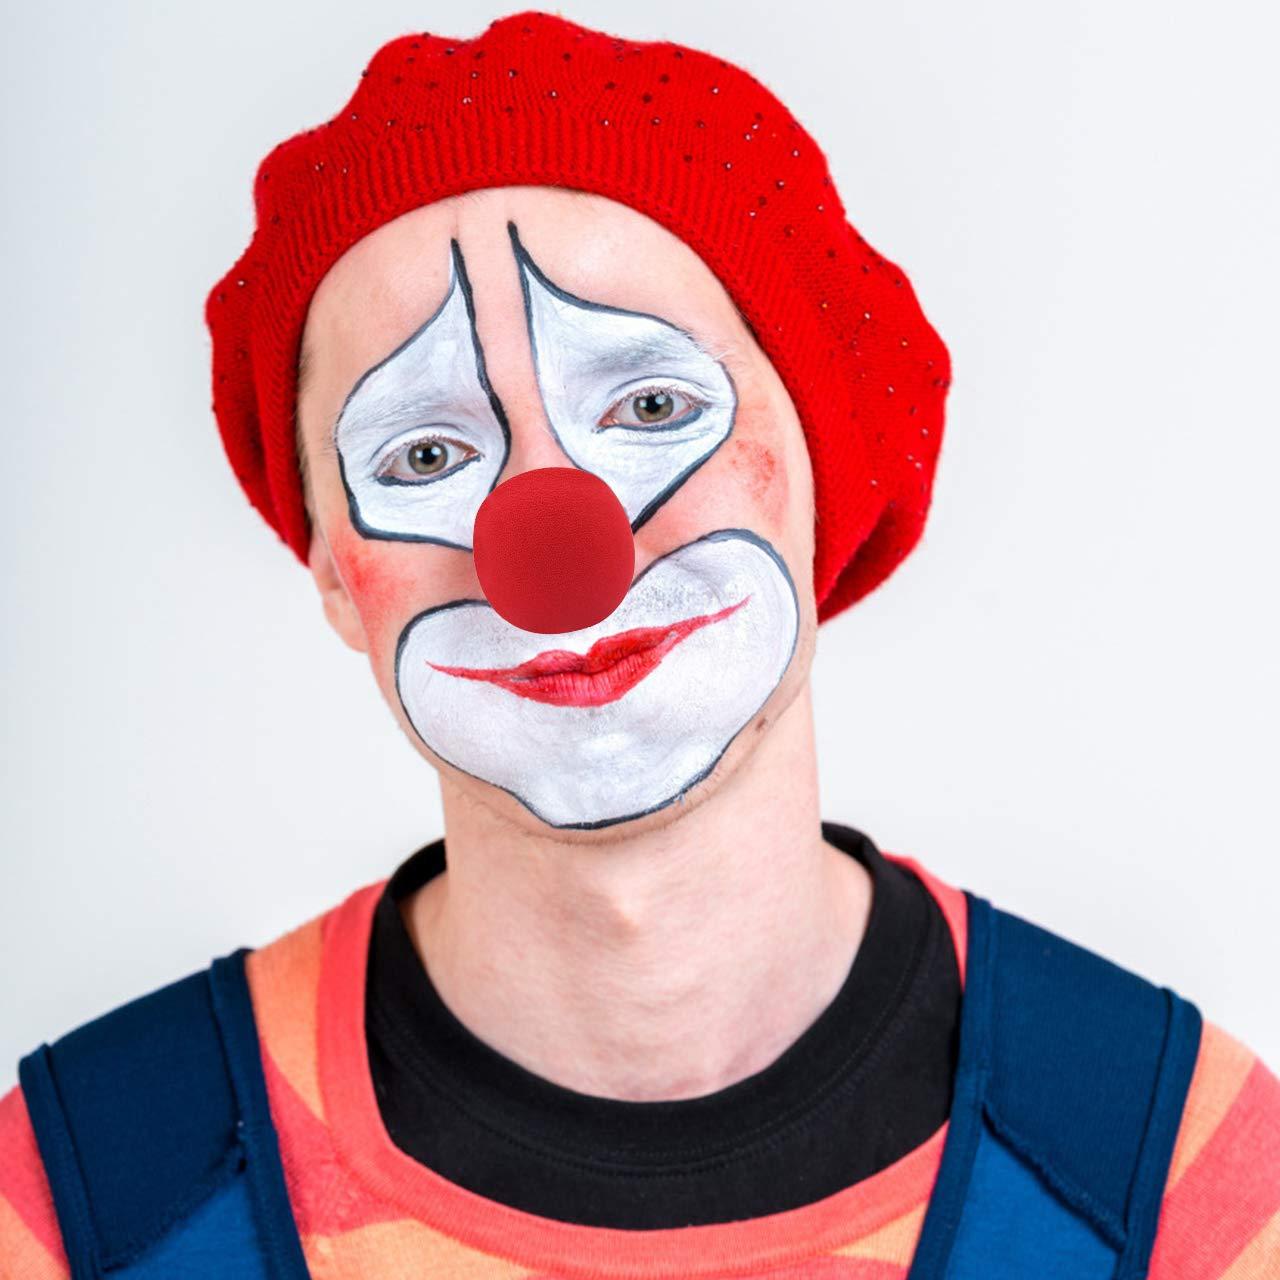 CCbeauty Clown Makeup Kit Professional White Black Red Face Paint